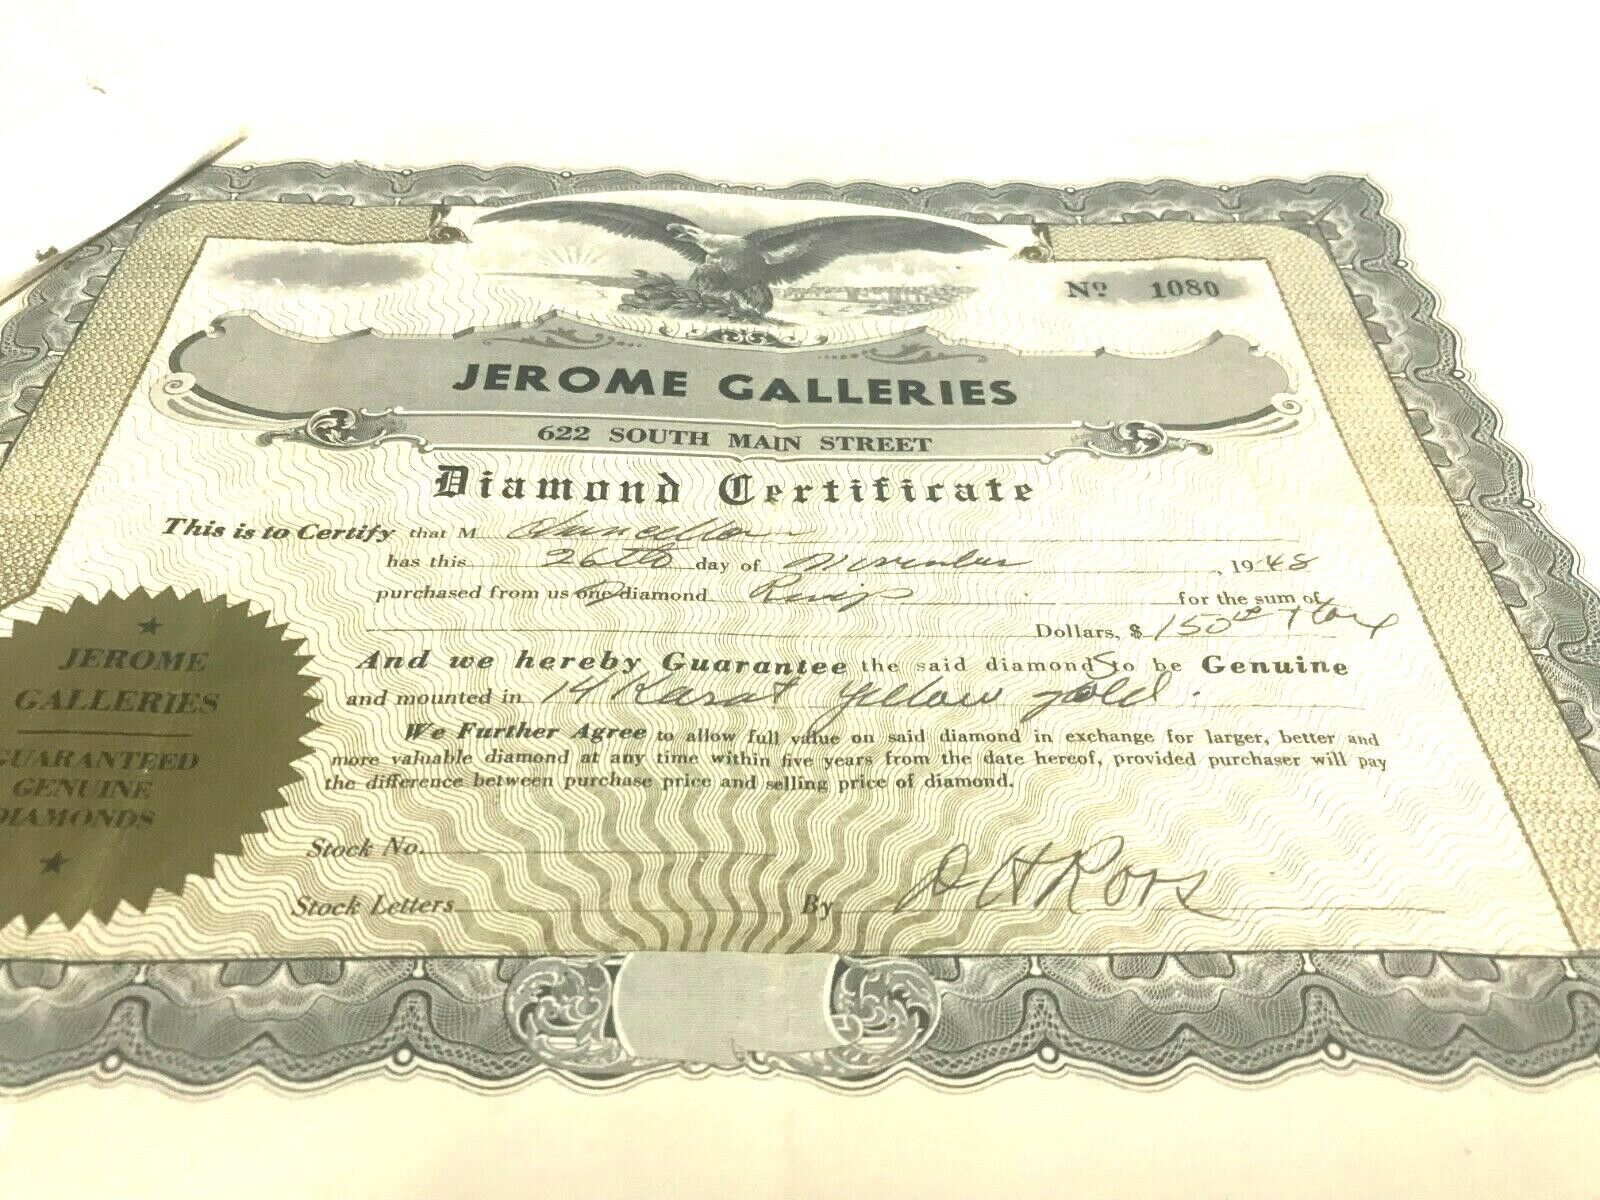 1948-Jerome Galleries-Los Angeles, California-Diamond Certificate-Stock-GOES (P)